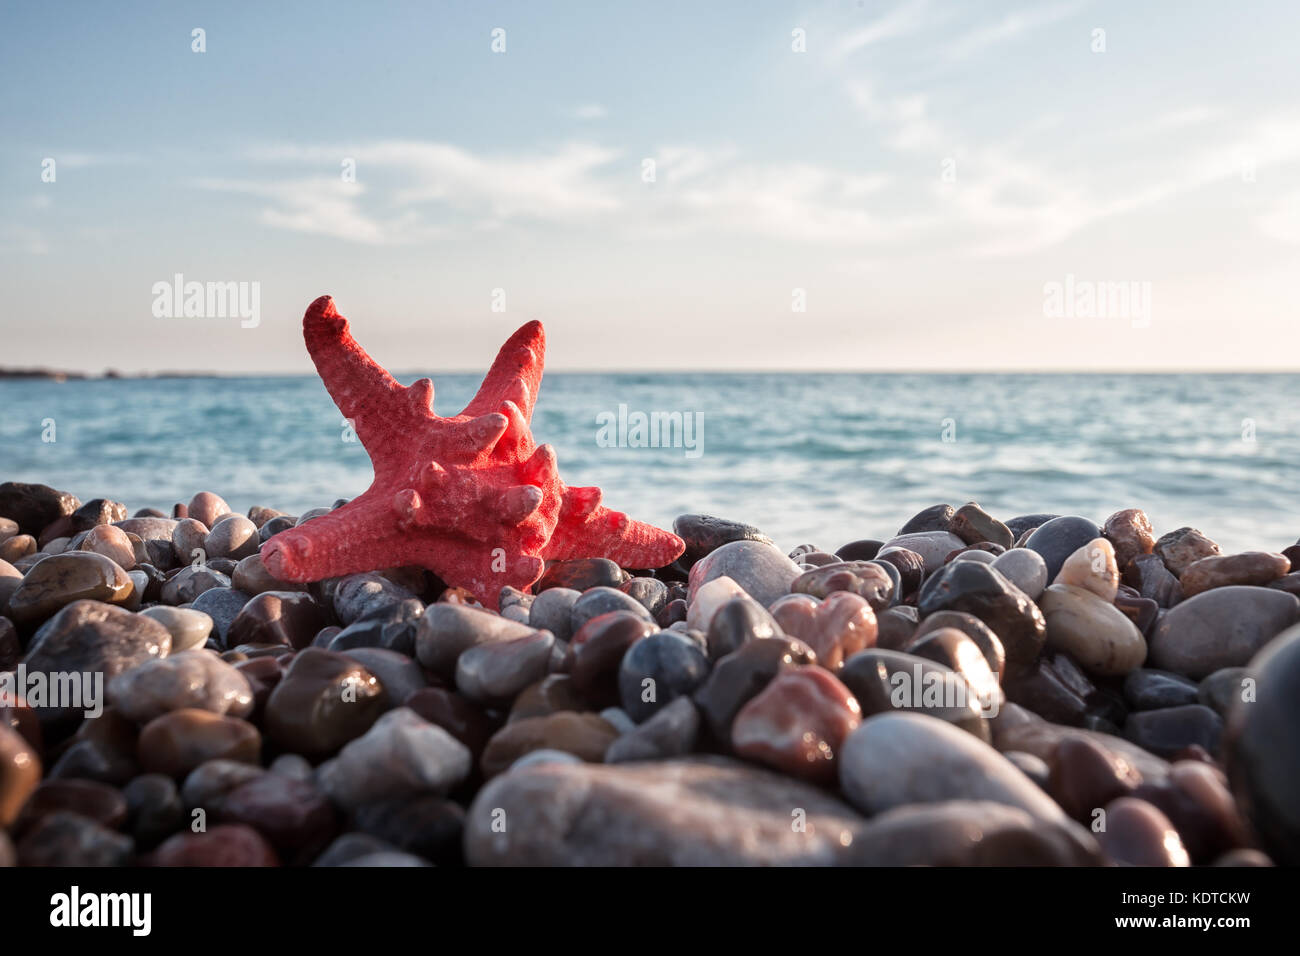 Red sea star on pebble beach Stock Photo